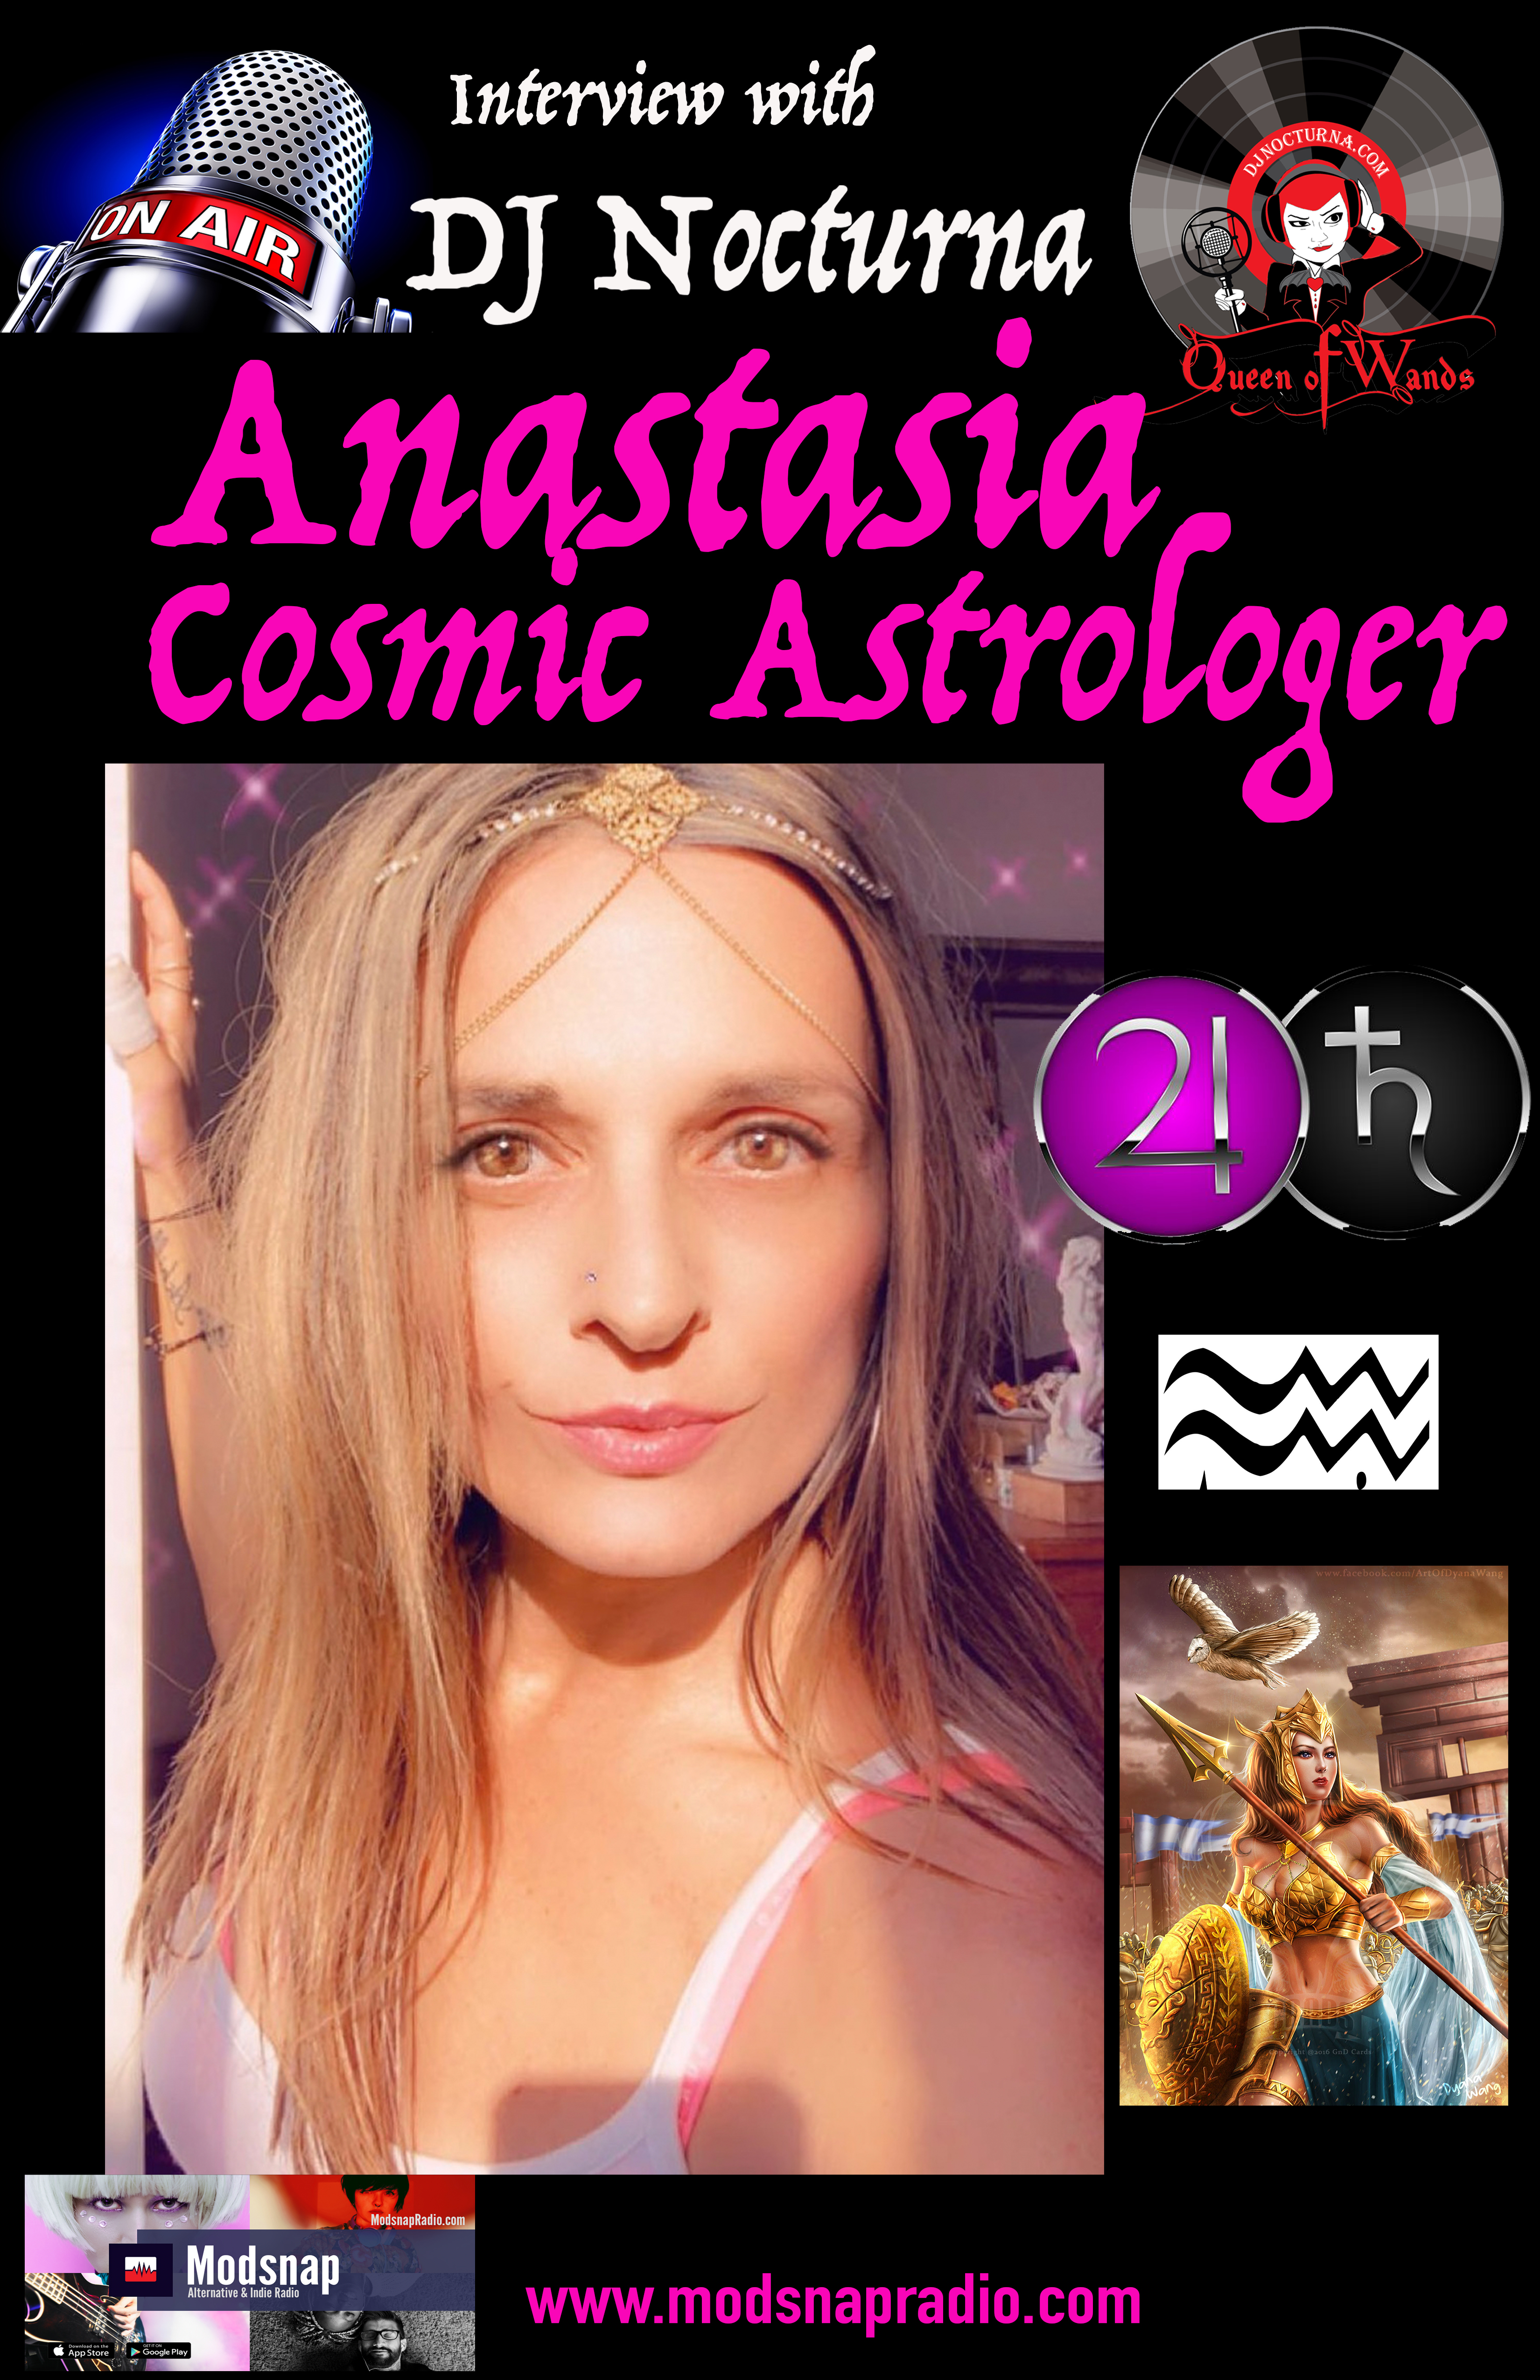 Anastasia Cosmic Astrologer